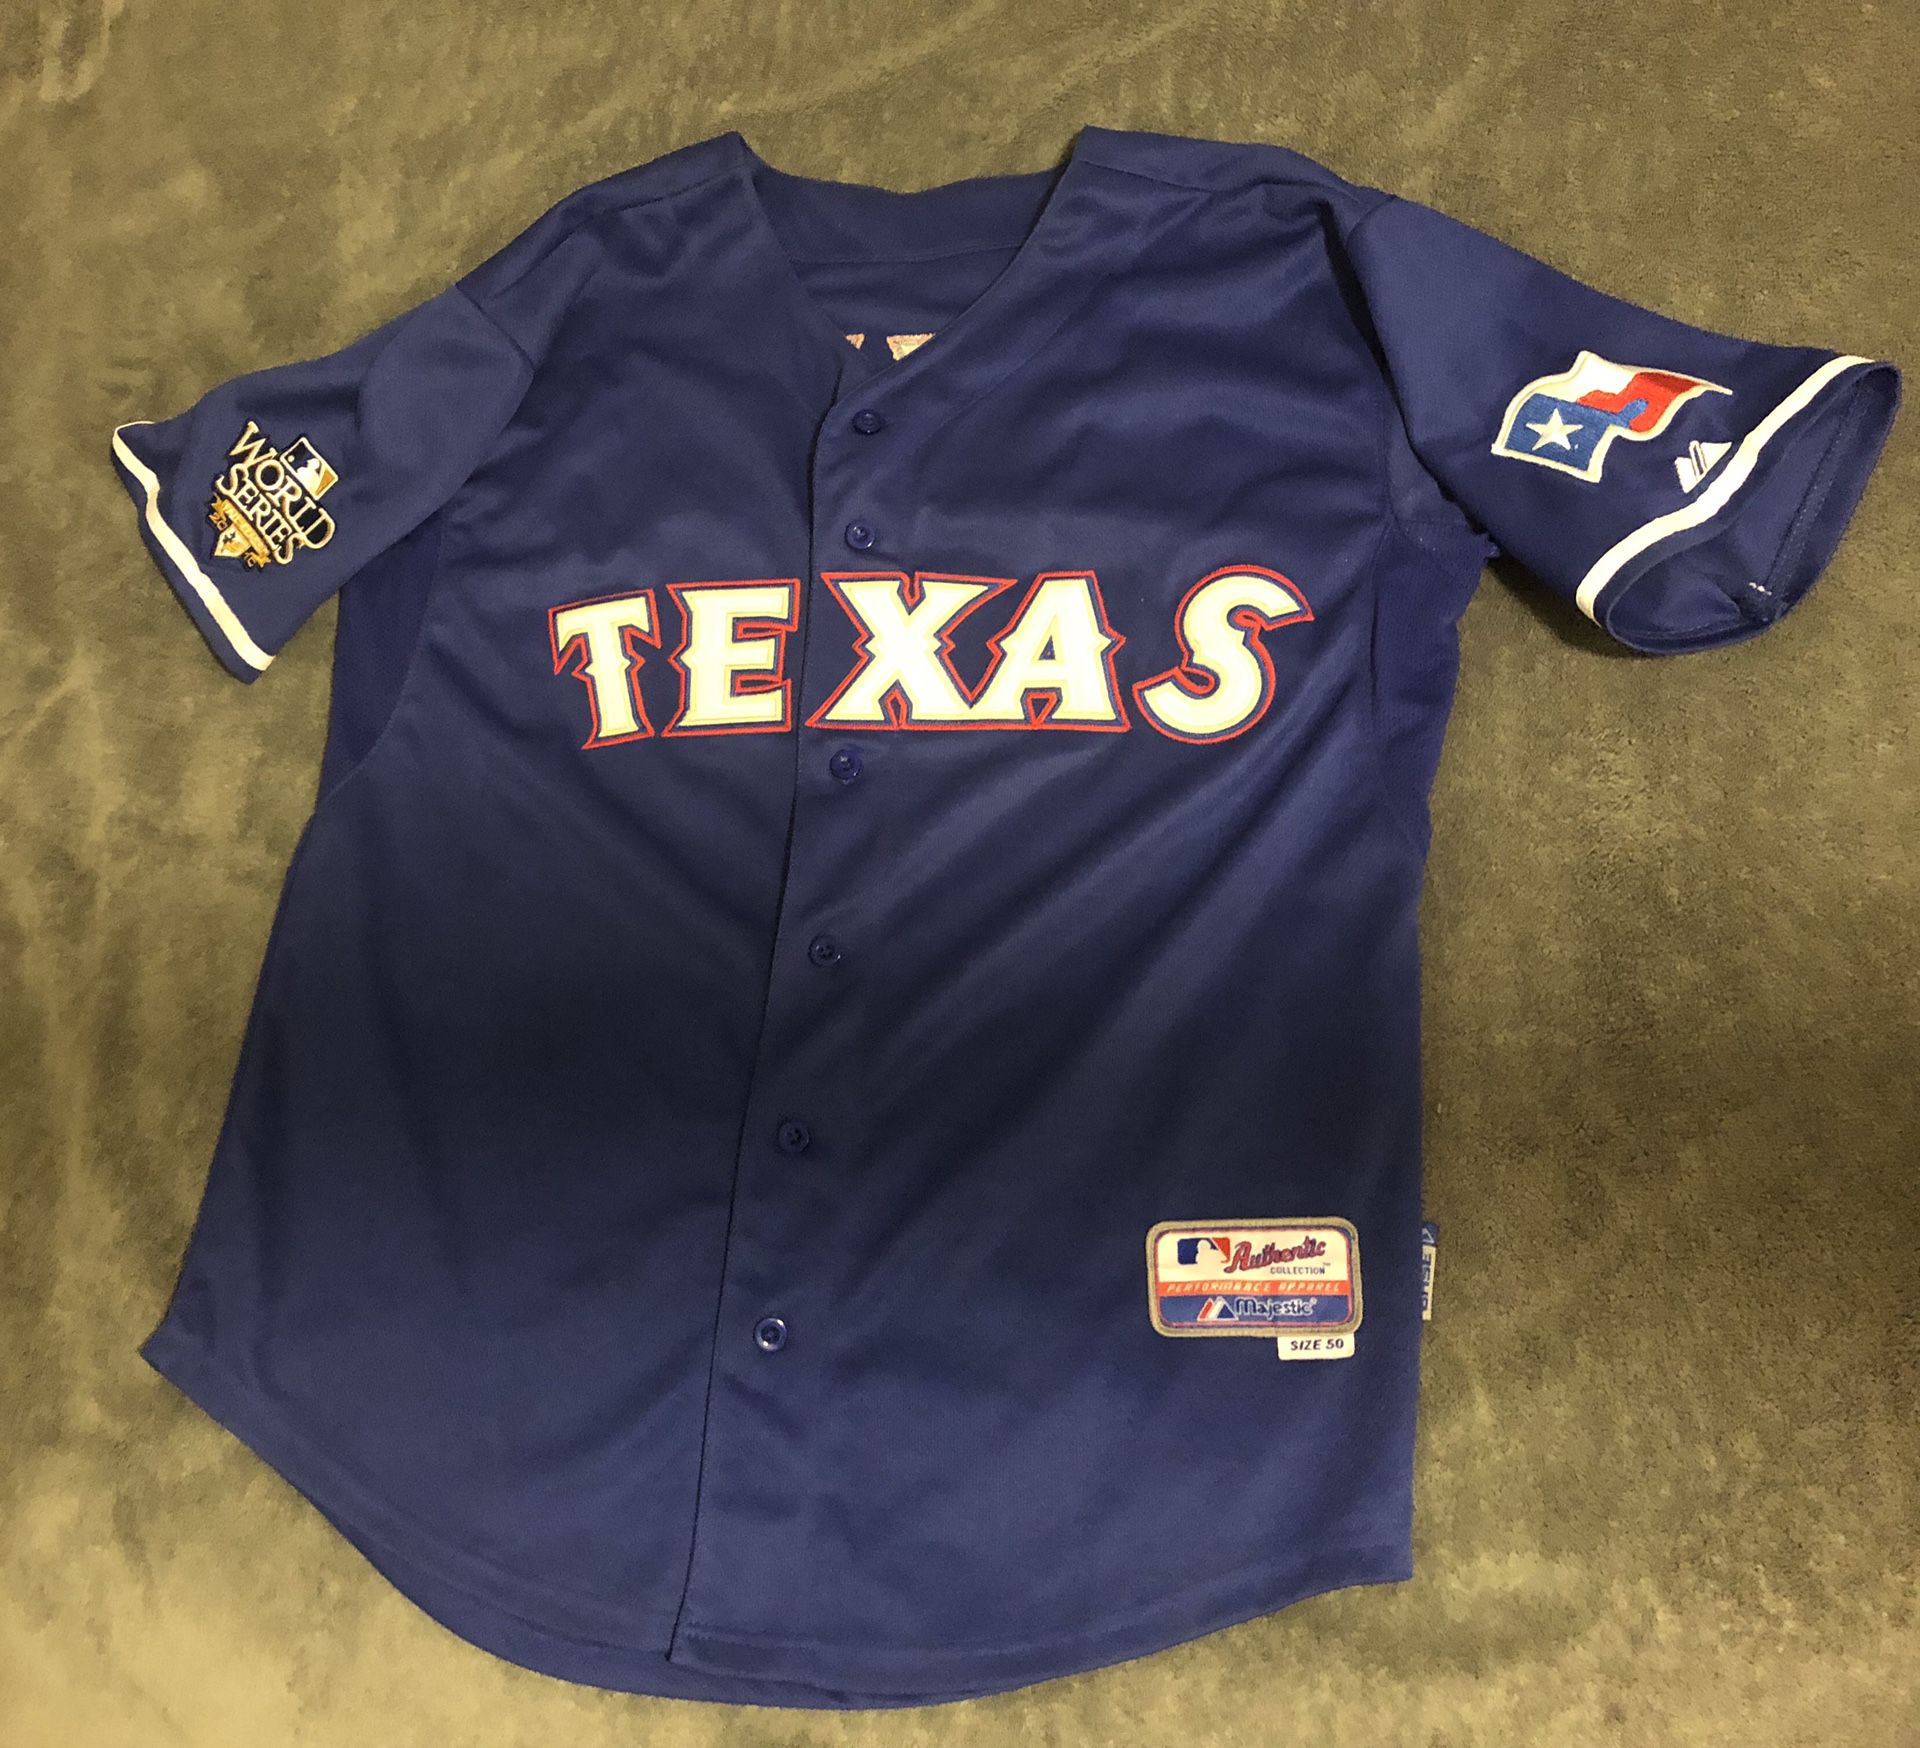 Josh Hamilton baseball jersey XL size